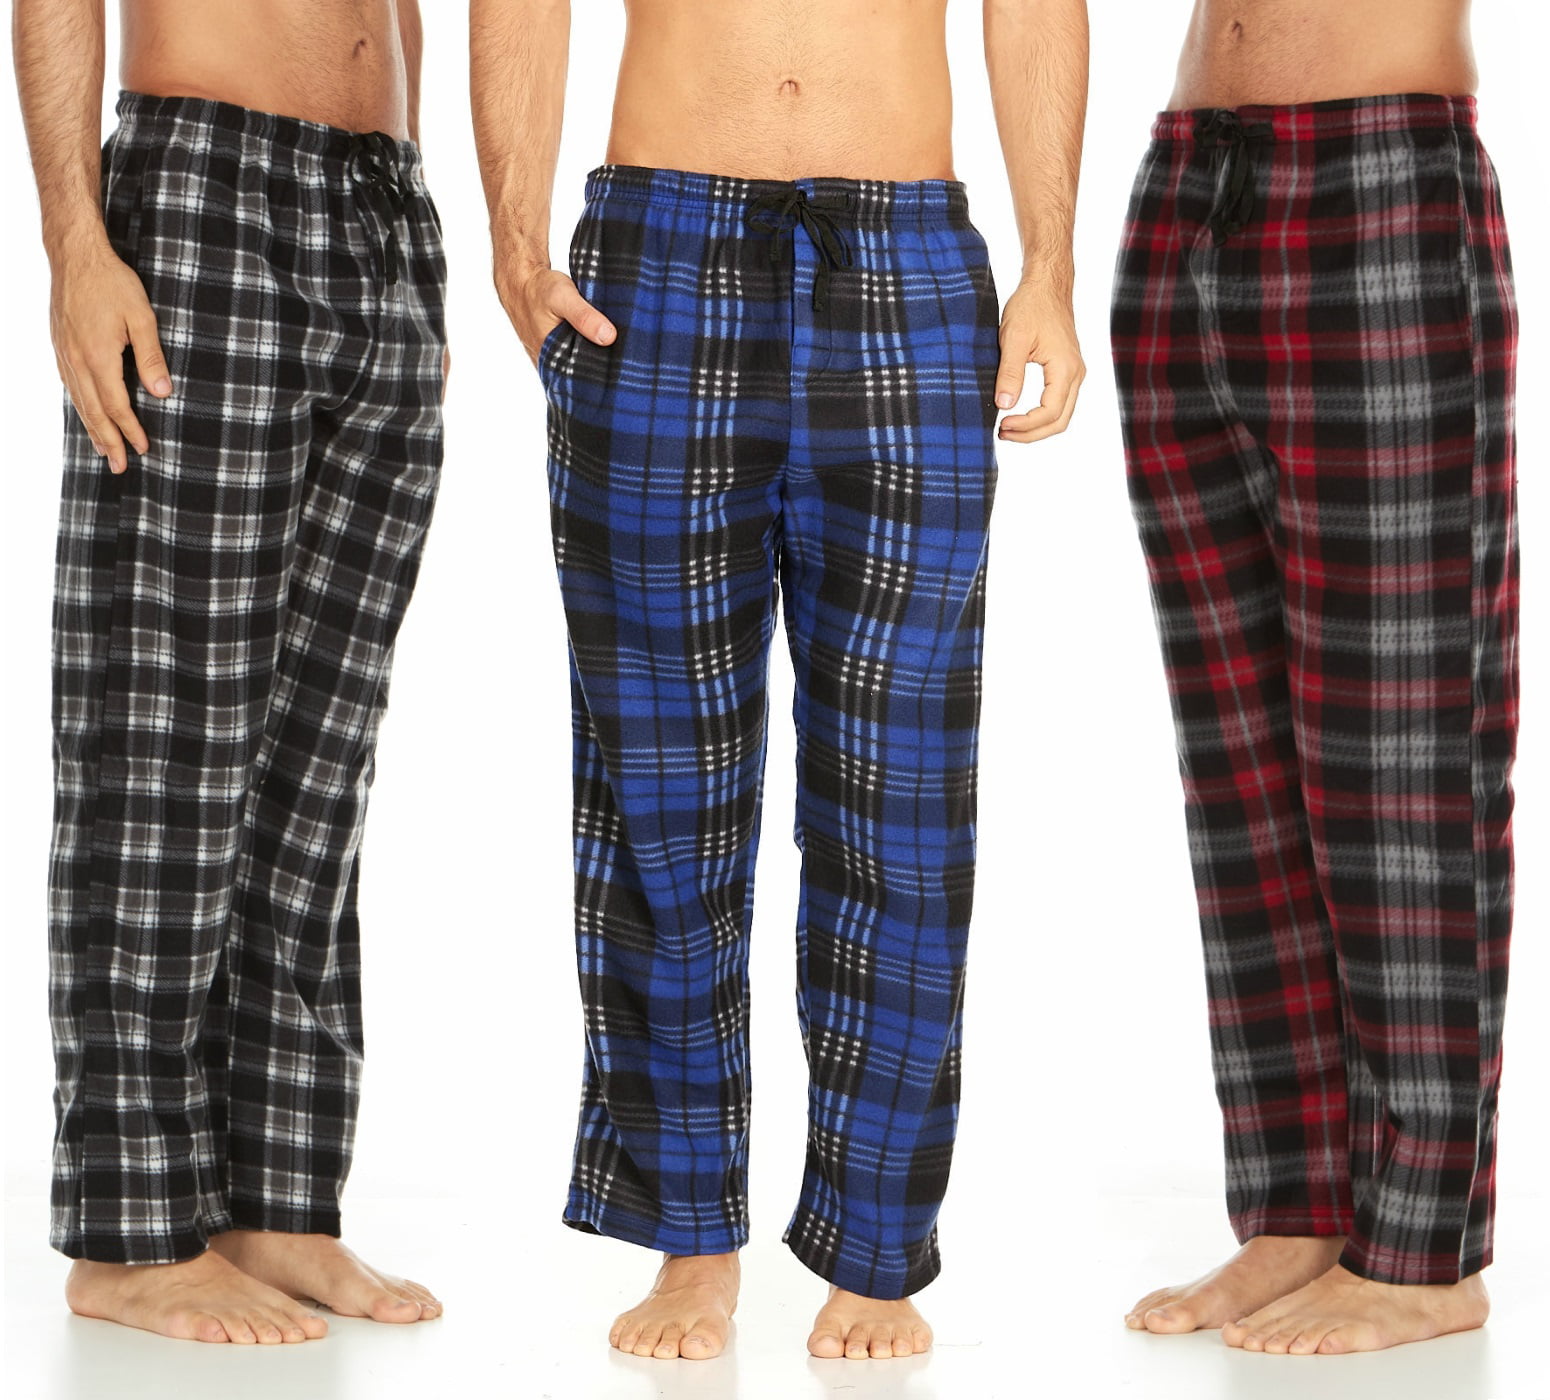 Active Club 2 Pack Men's PJ Microfleece Pajama Lounge/Pants Set Sleepwear PJs-with Pockets 